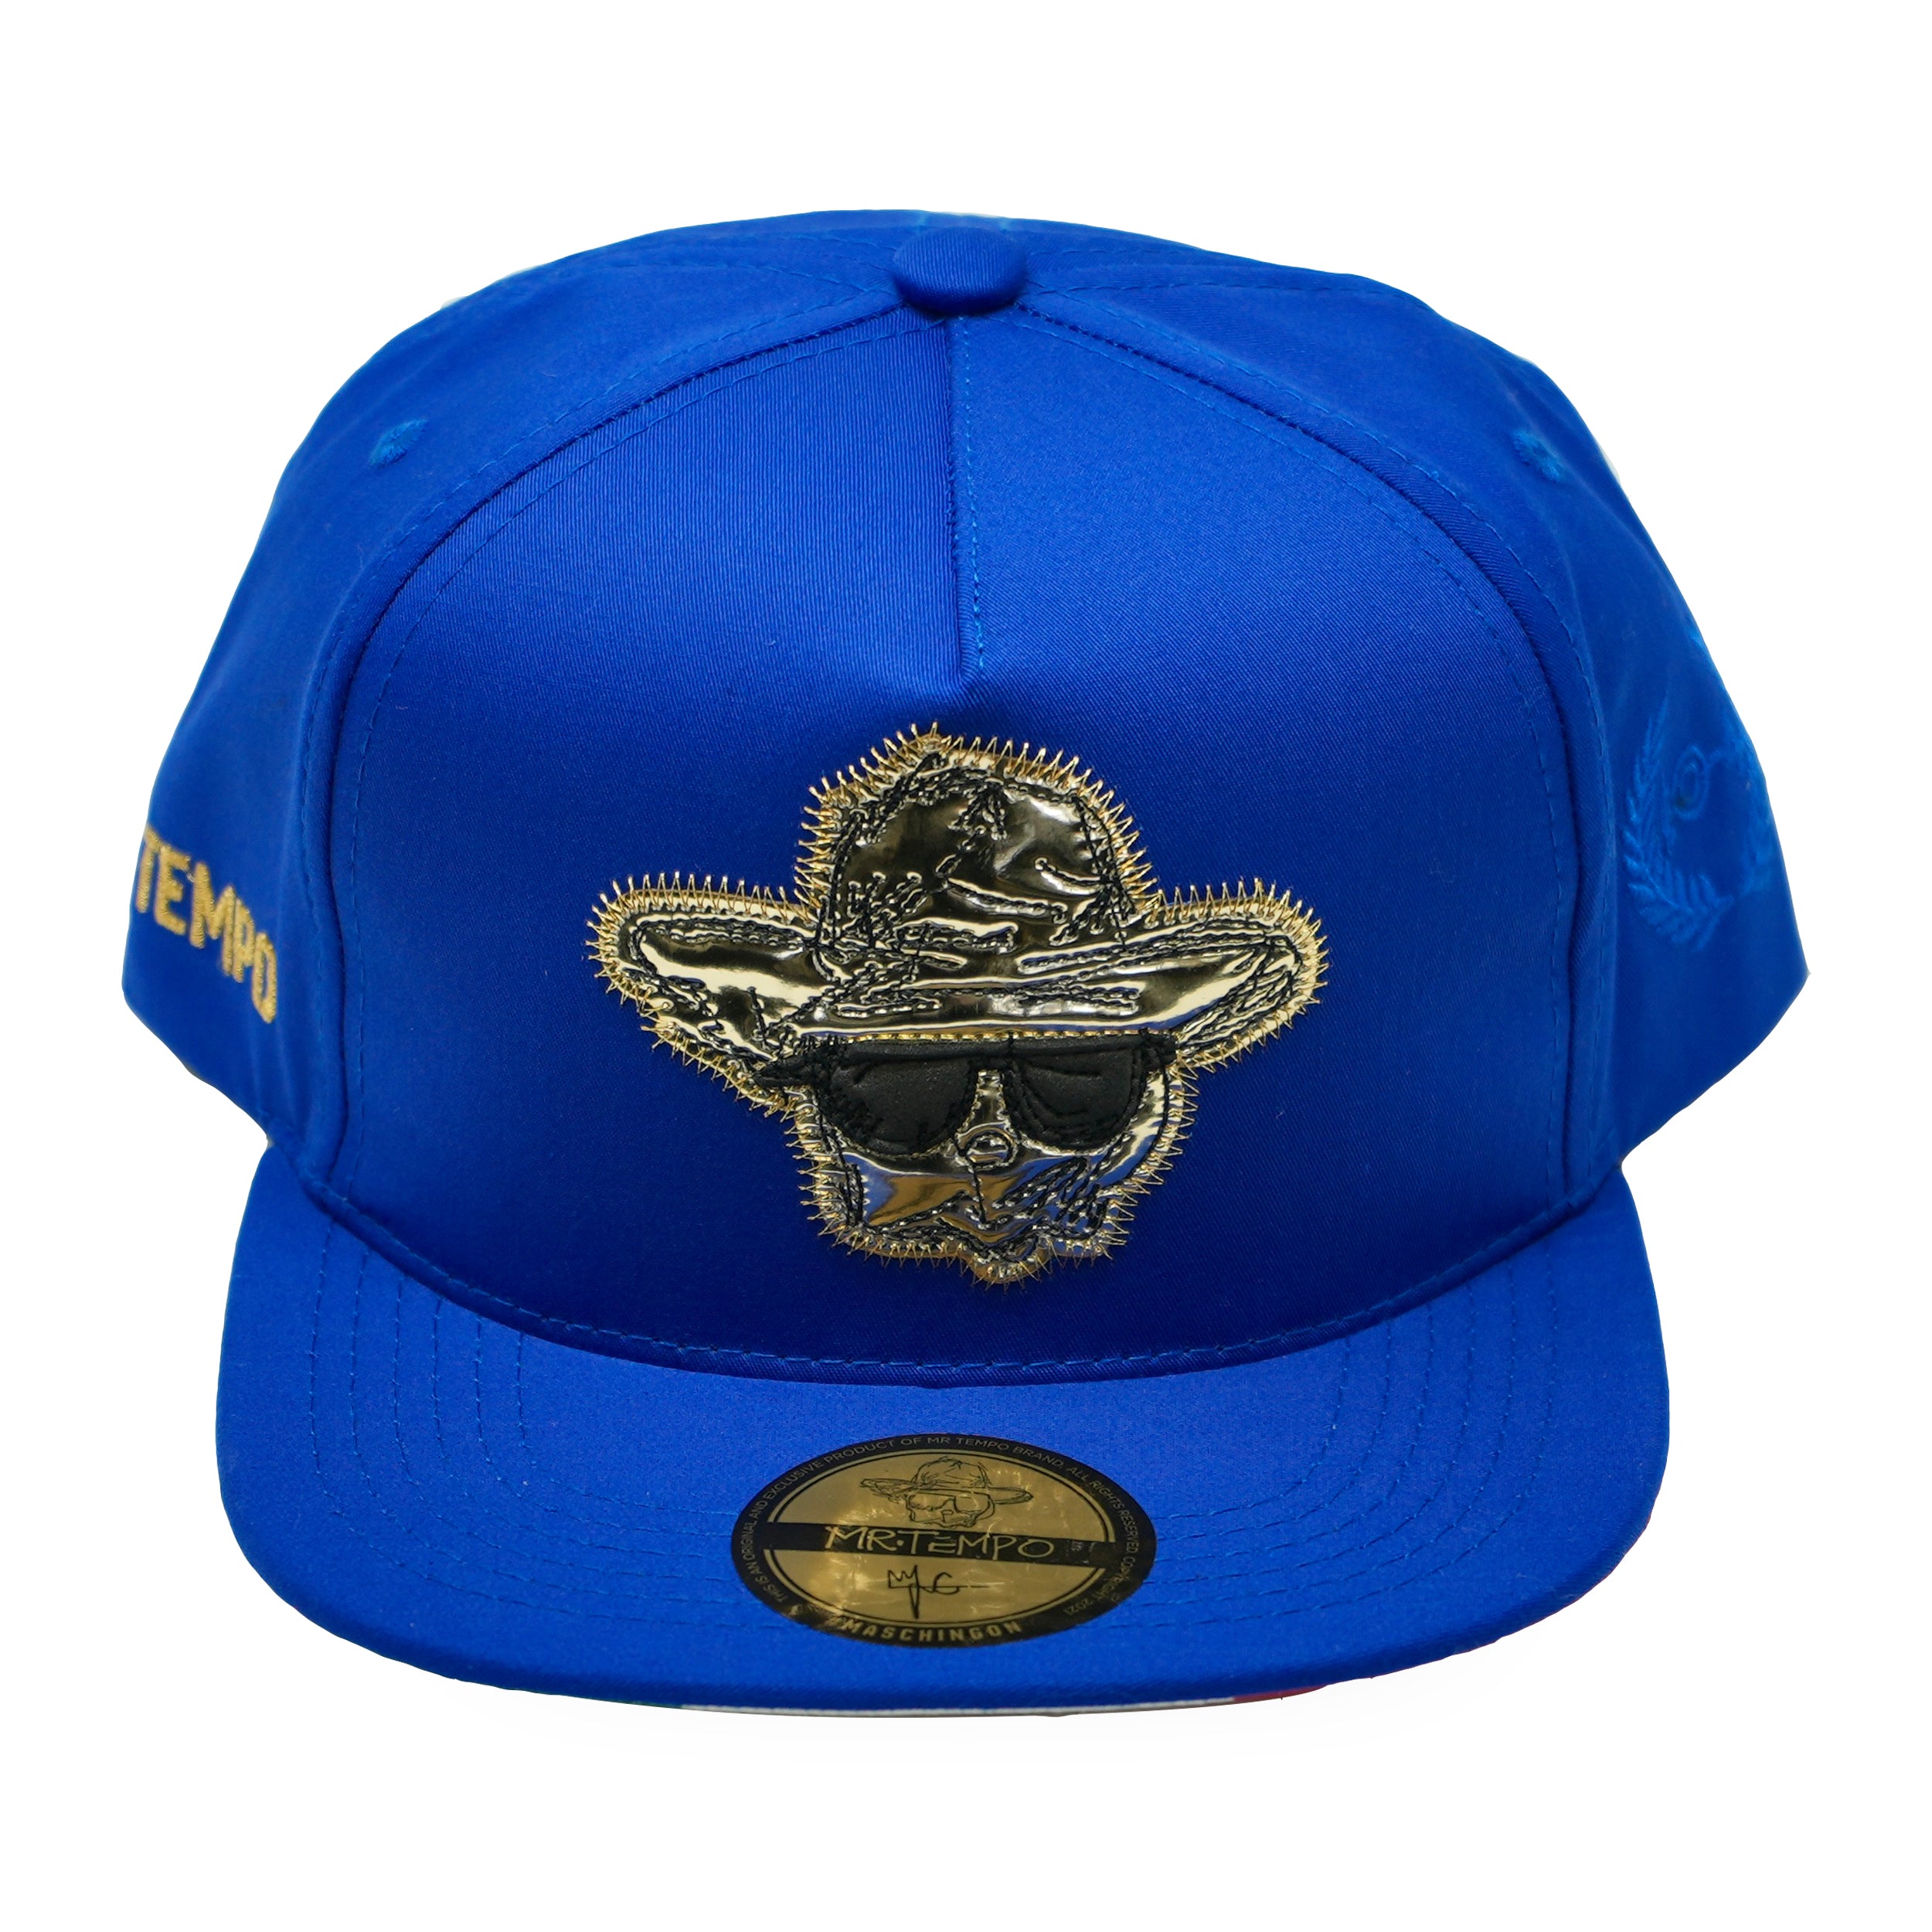 Mr.Tempo Navy Blue Hat